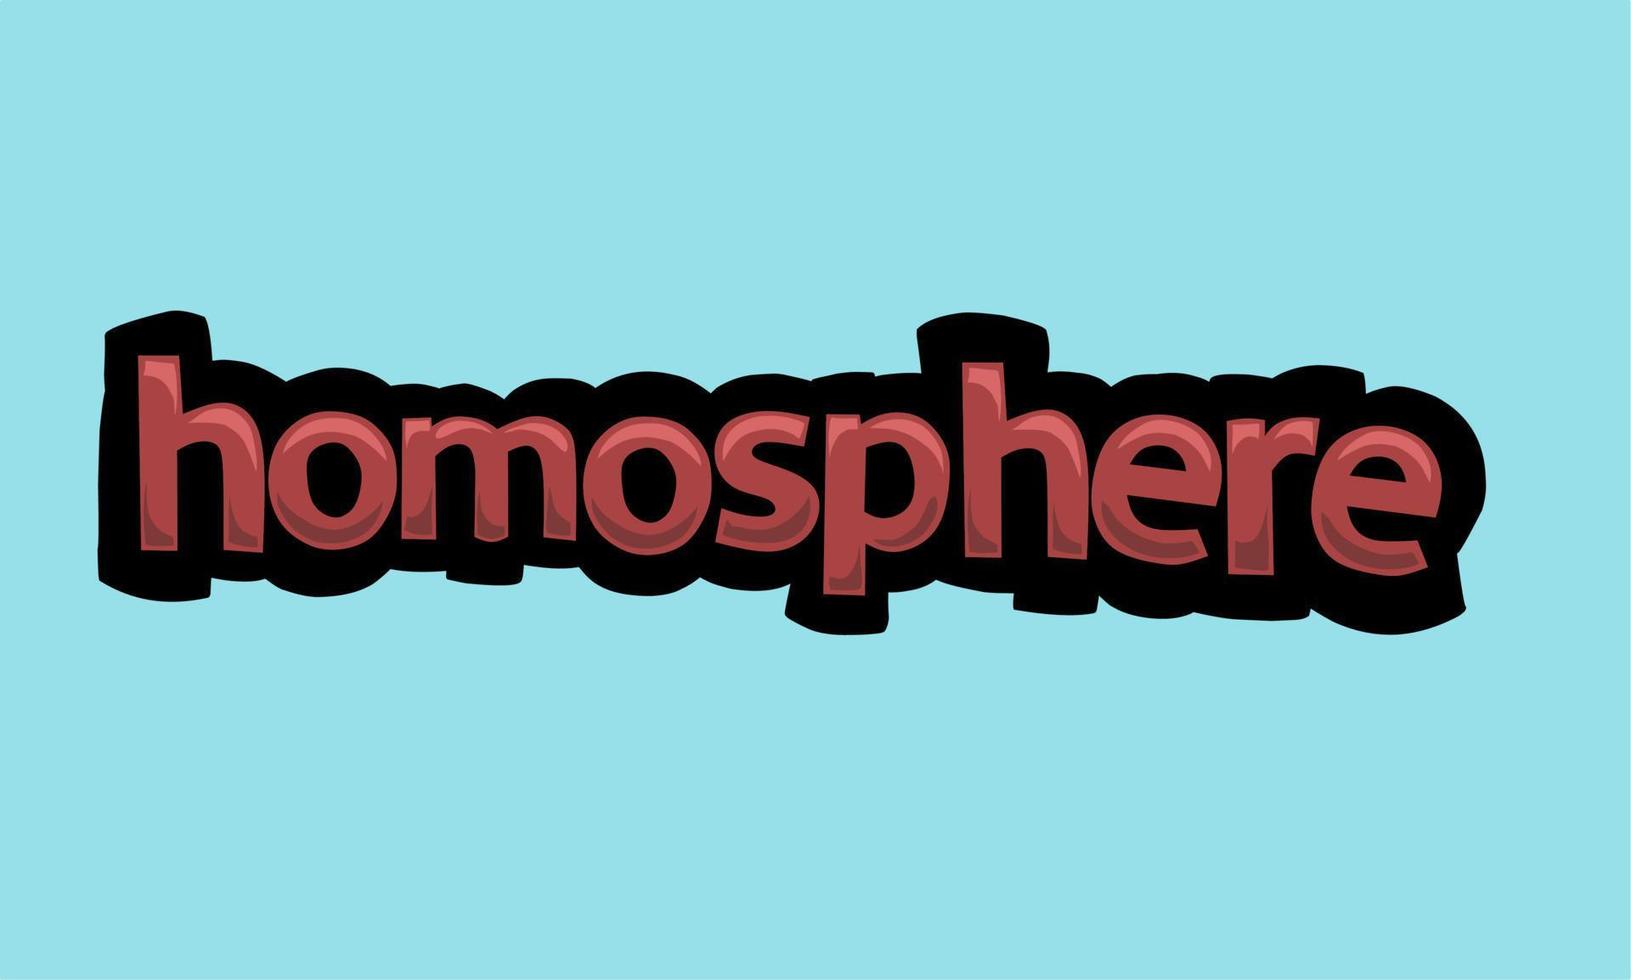 HOMOSPHERE  background writing vector design